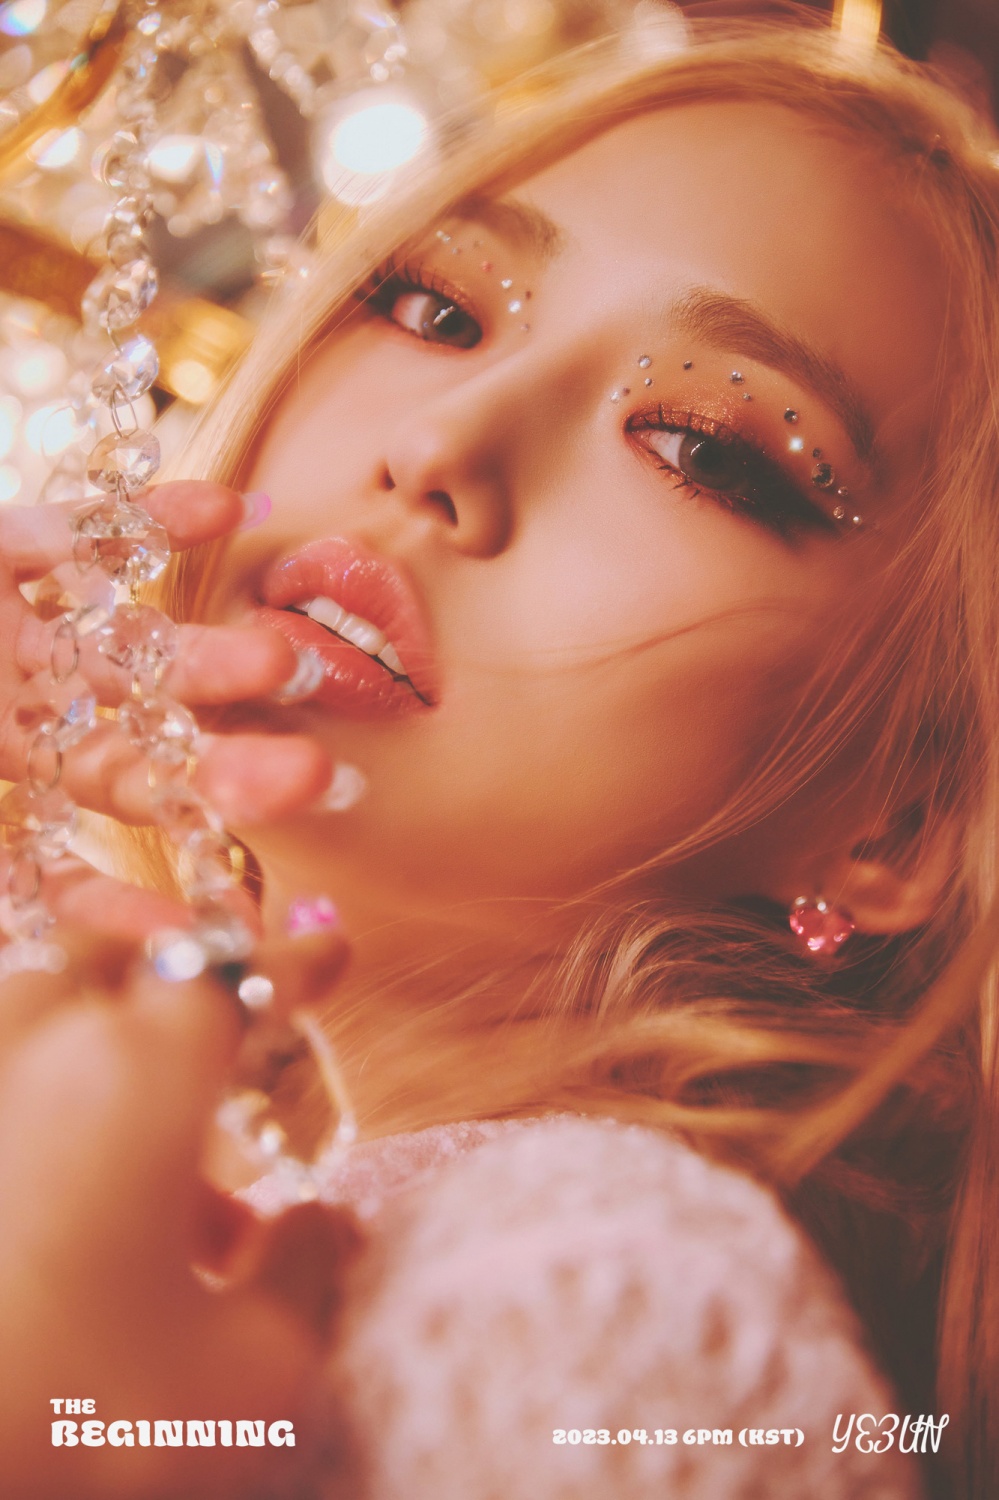 YEEUN unveils 'Cherry Coke' MV teaser transformed into a human cherry